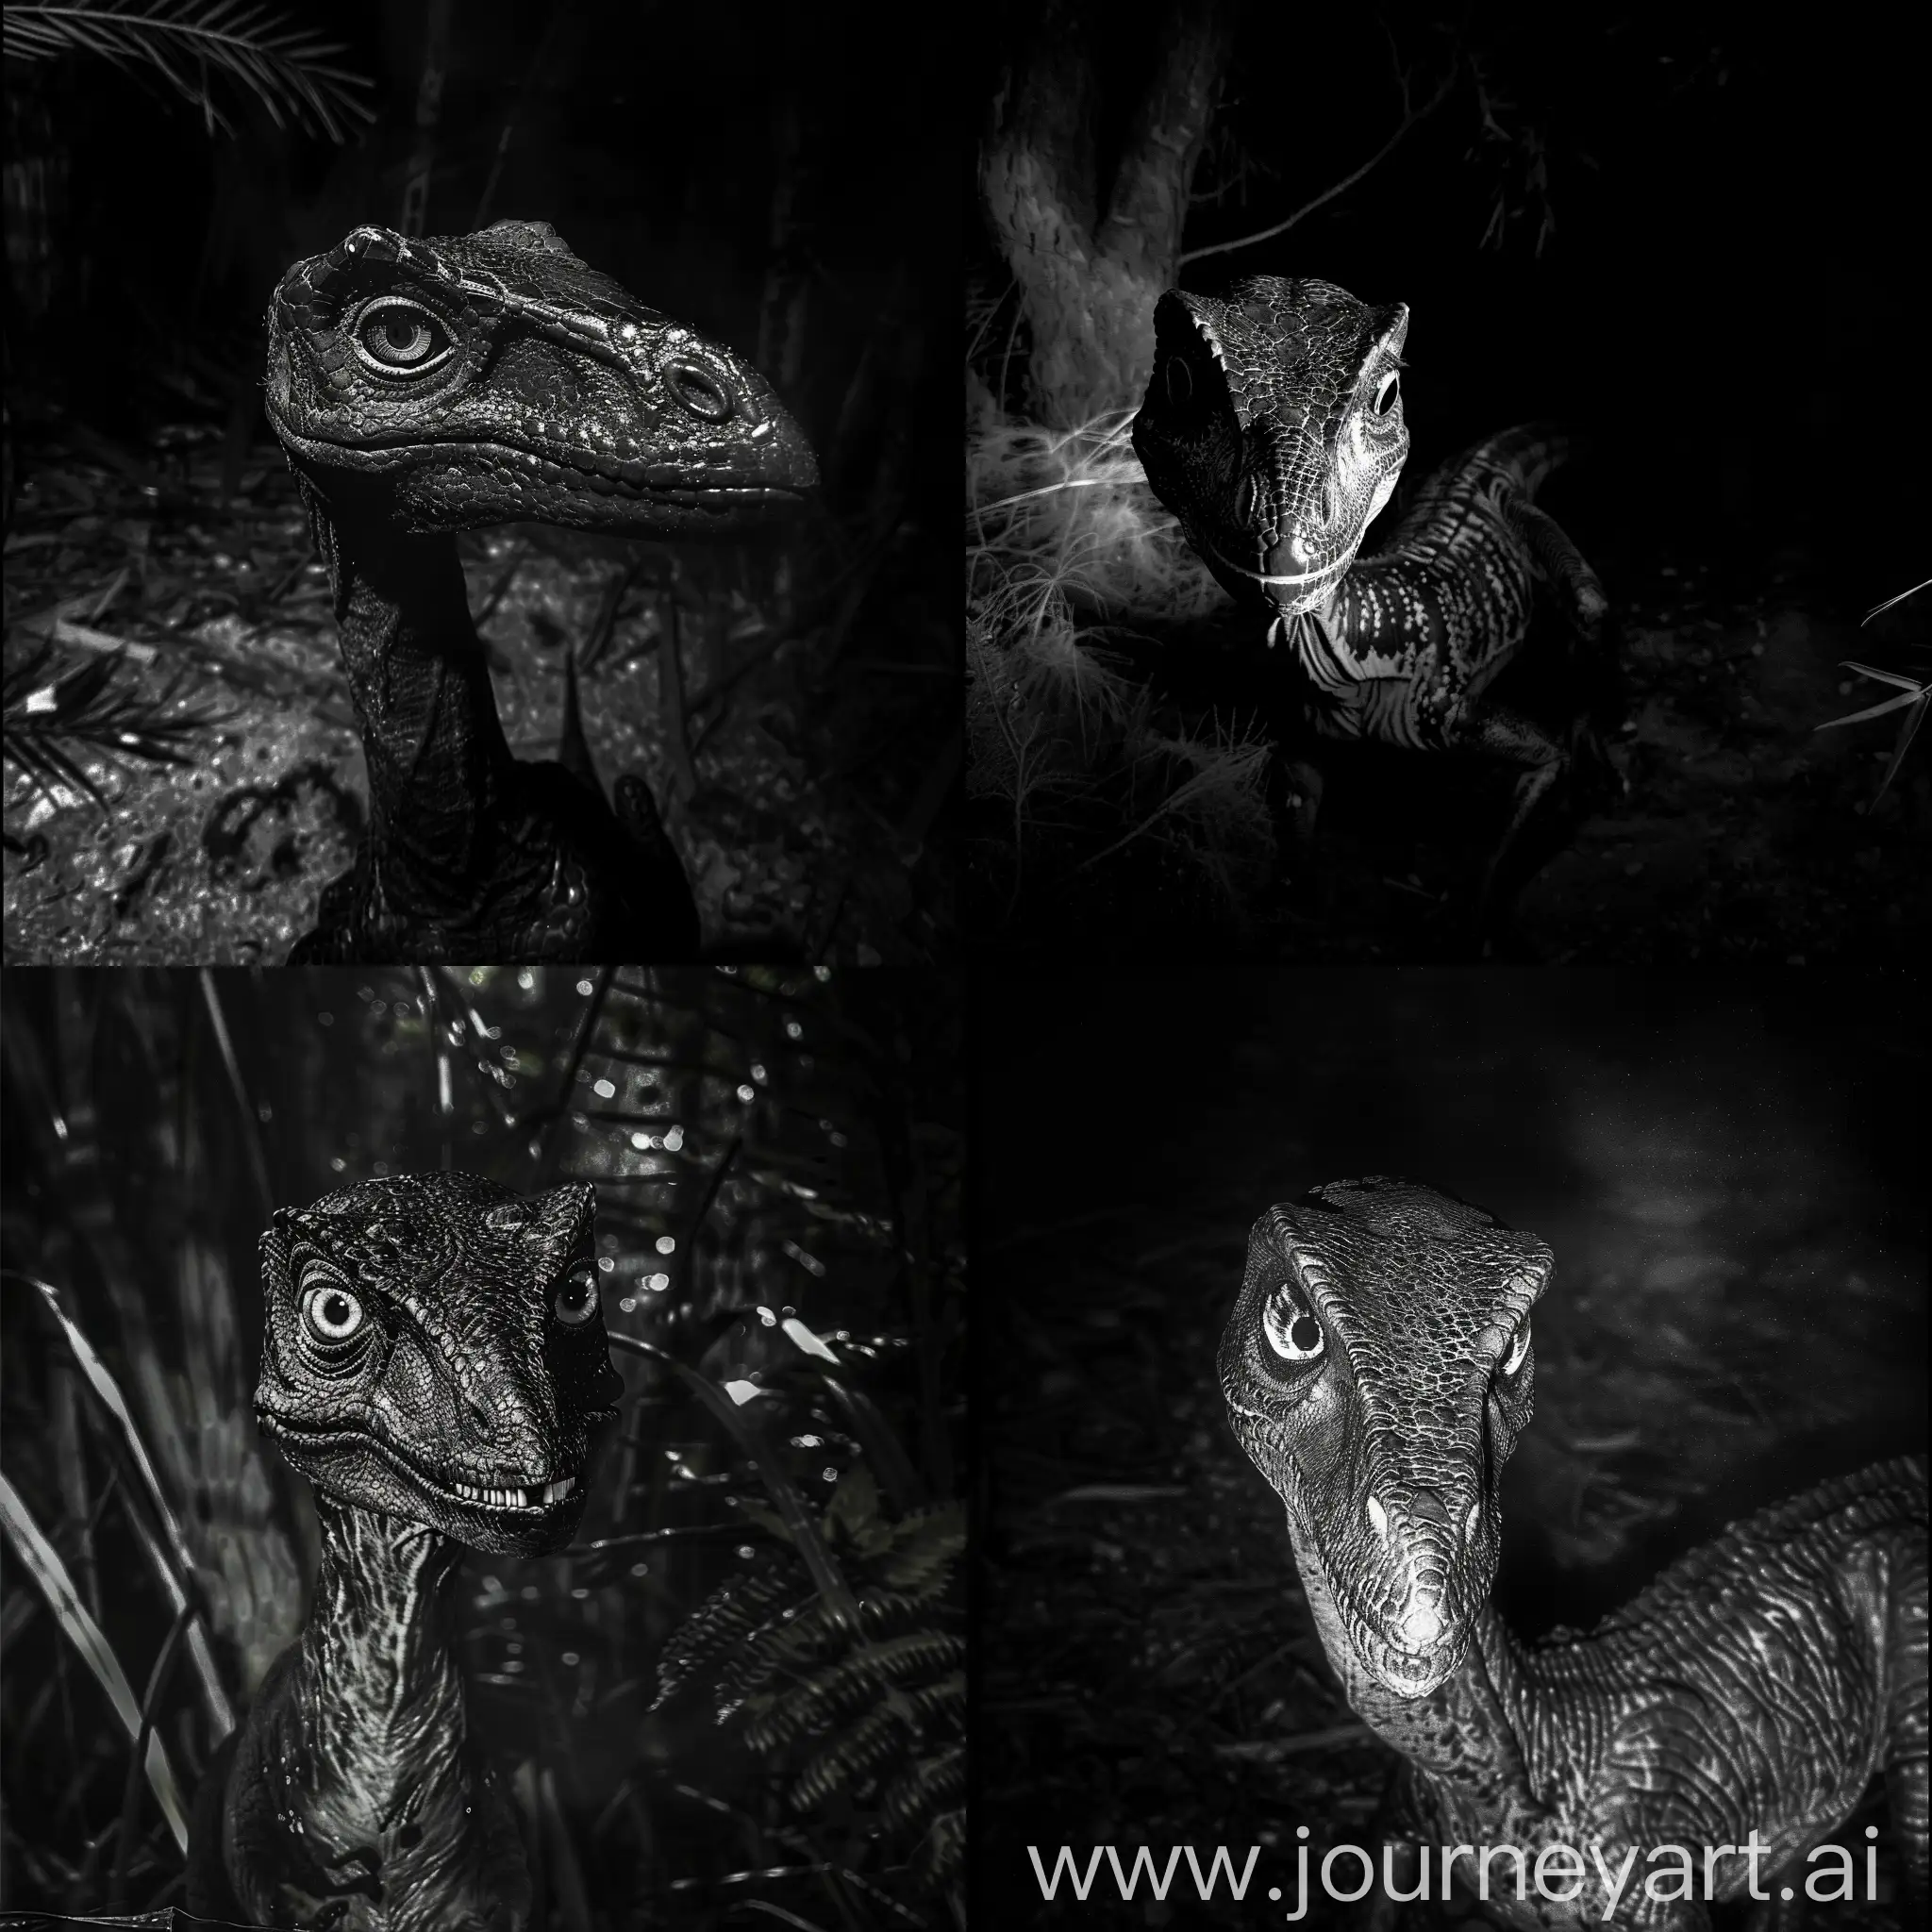 Velociraptor caught on security camera at night, looking at camera, eyes shining on night camera, Velociraptor black and white night camera dusty environment